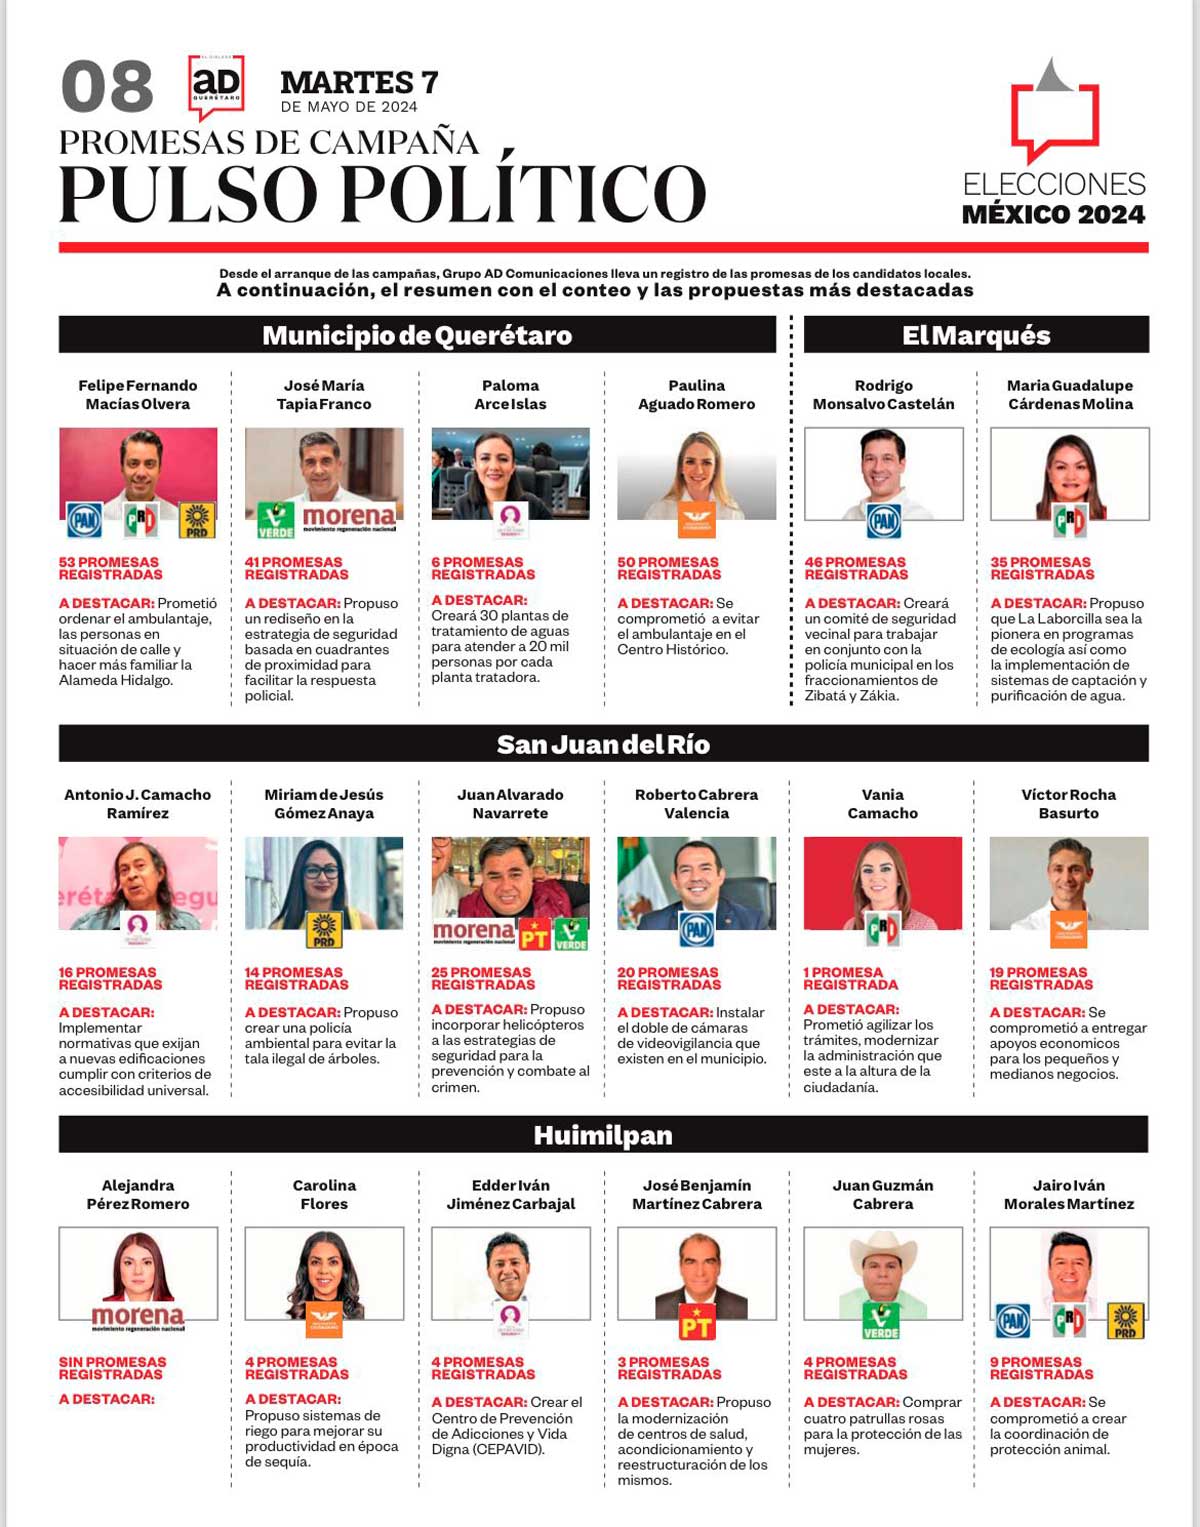 Avance de promesas de campaña registradas de candidatos en Querétaro